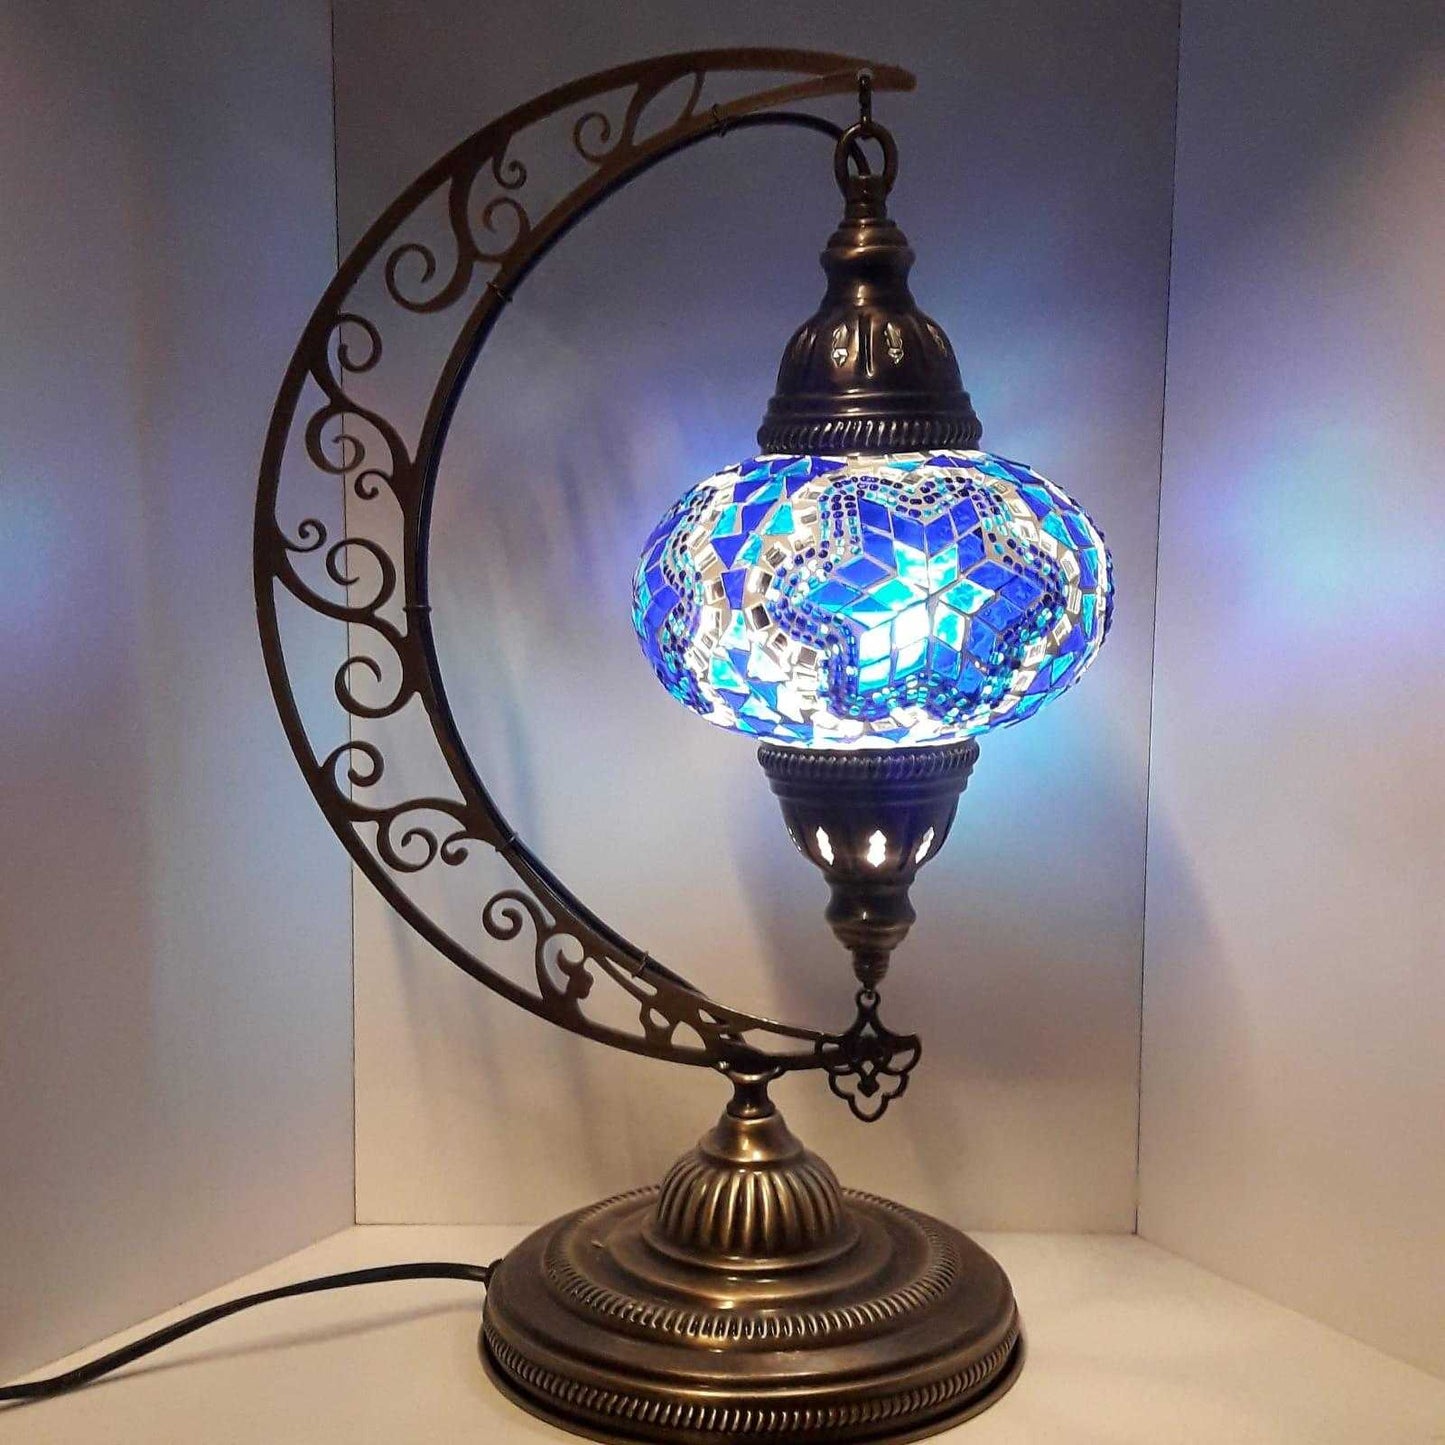 Bosphorusshopping,Mosaic Lamp Design AT2026